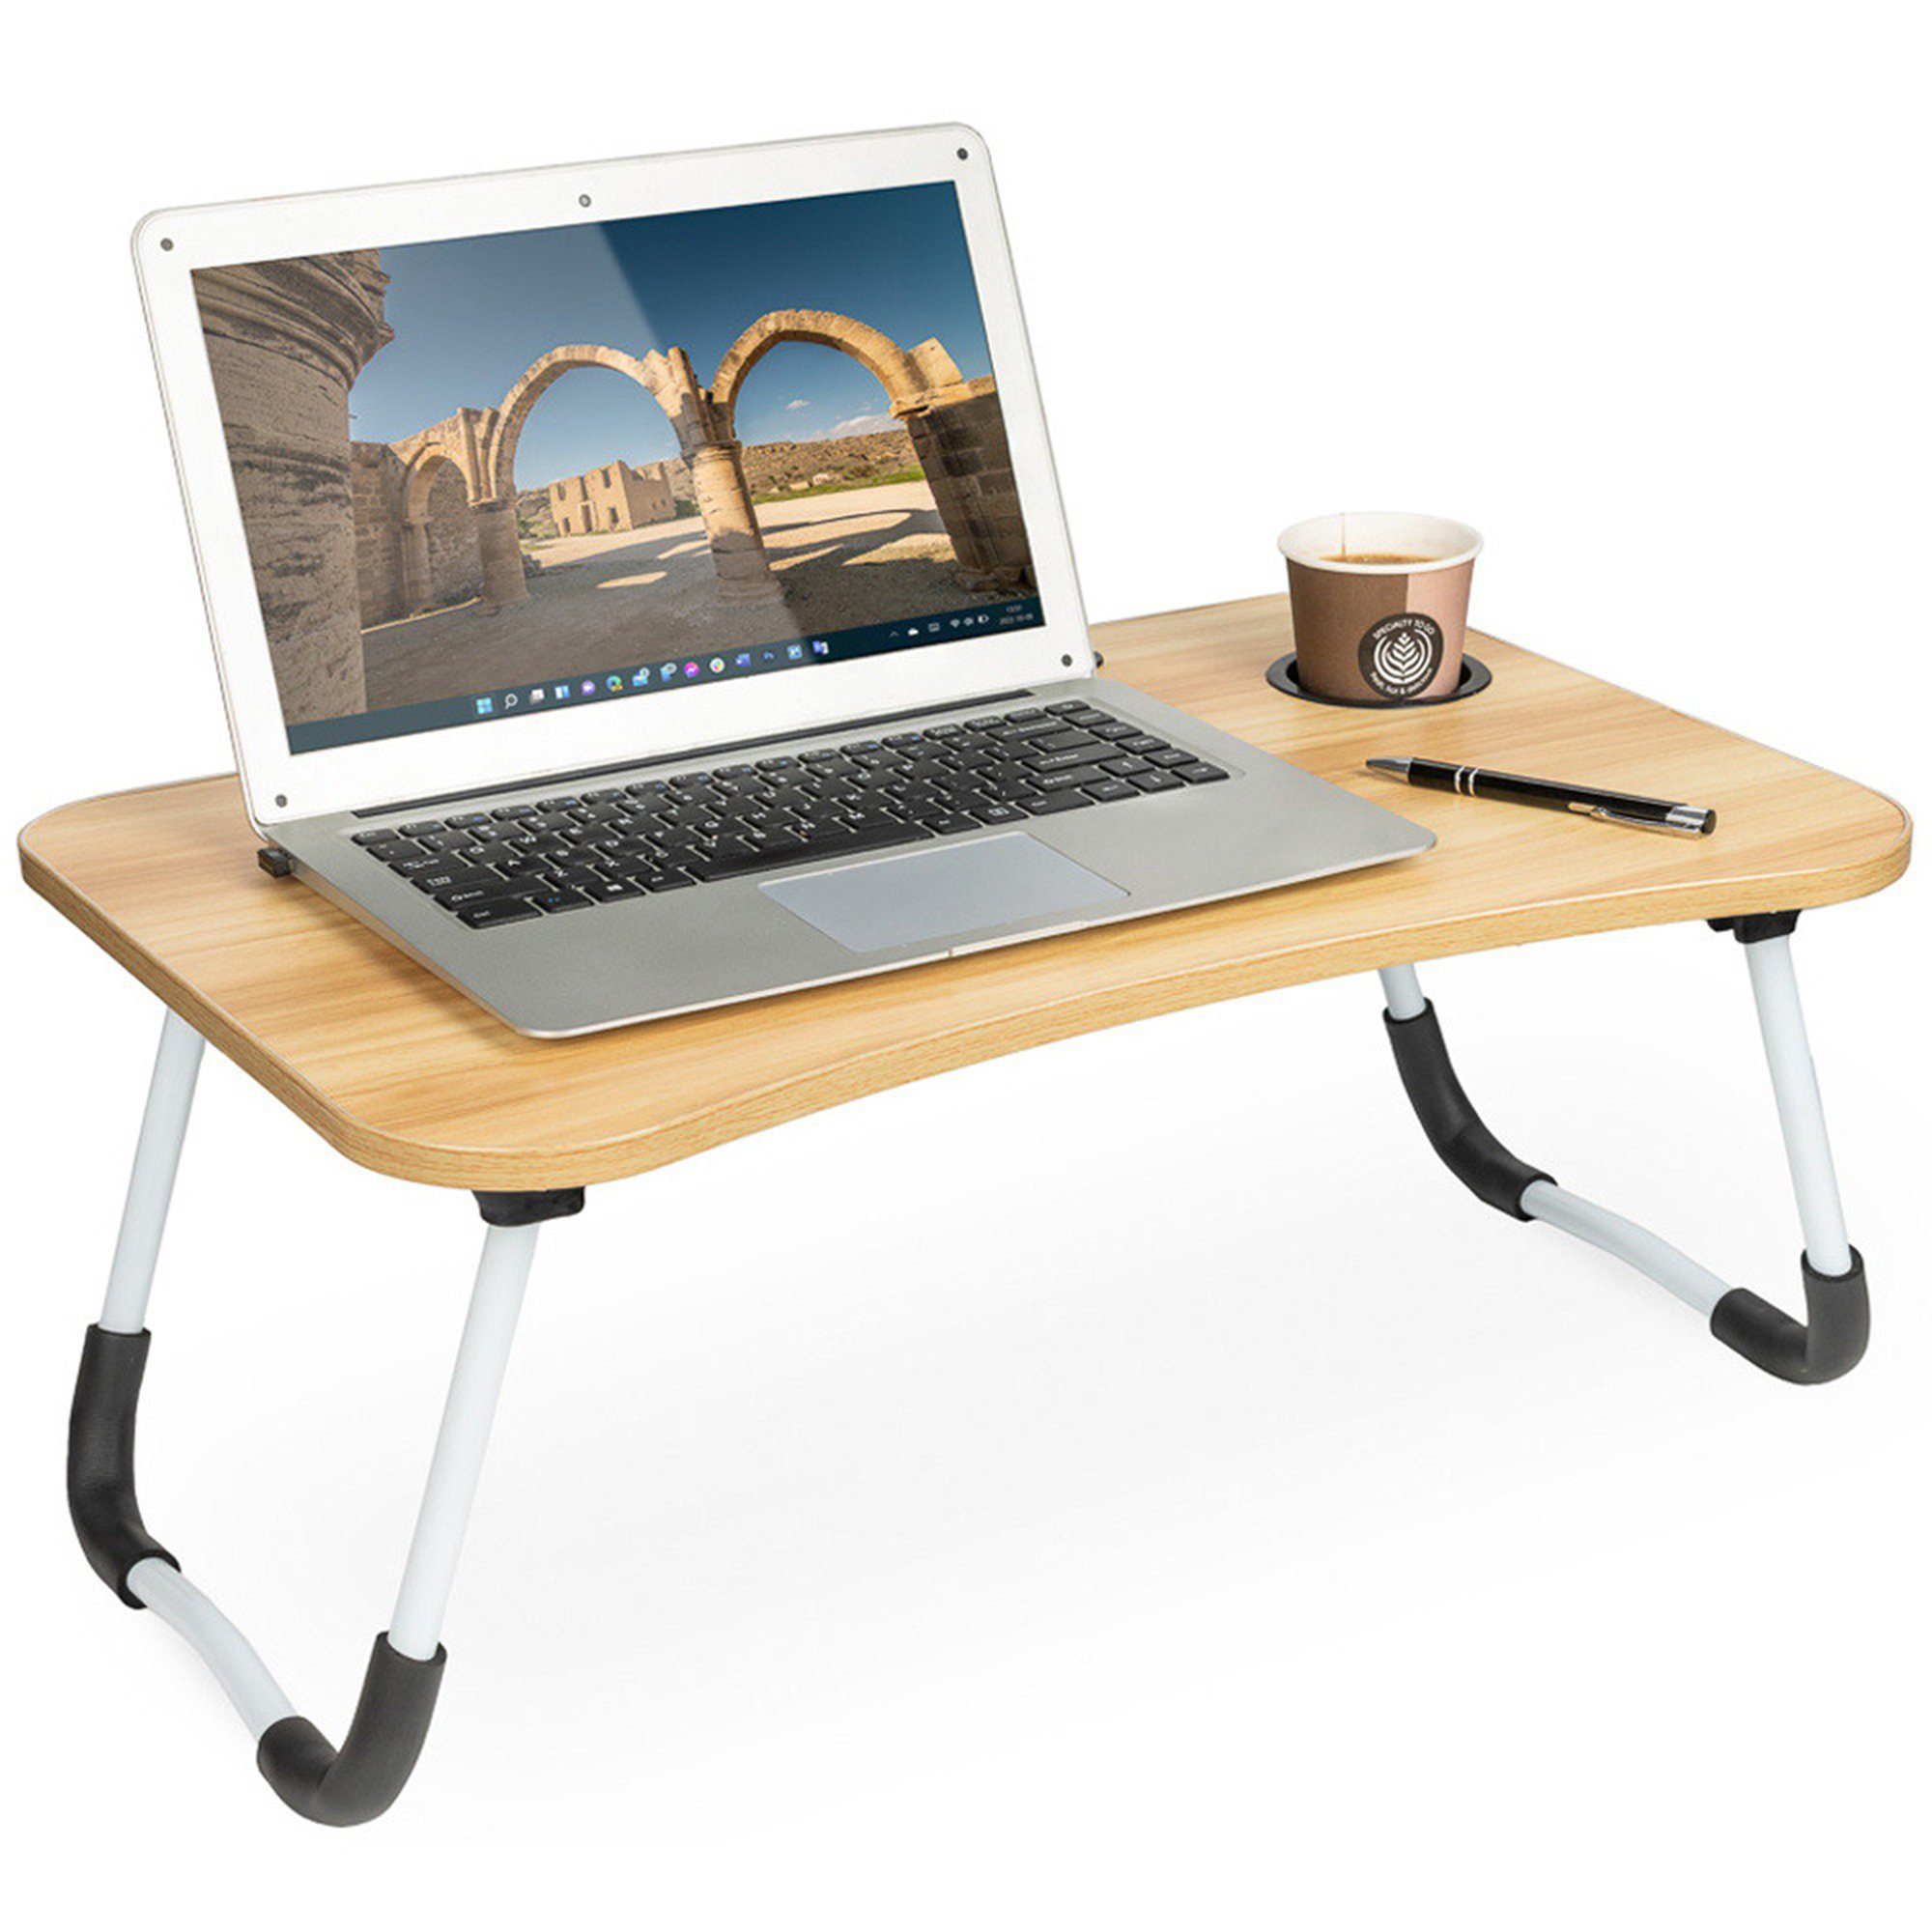 TSB Laptoptisch Laptop, Faltbar Tisch Bett, Notebooktisch Beistell, Betttisch Laptoptisch Werk Tablet,